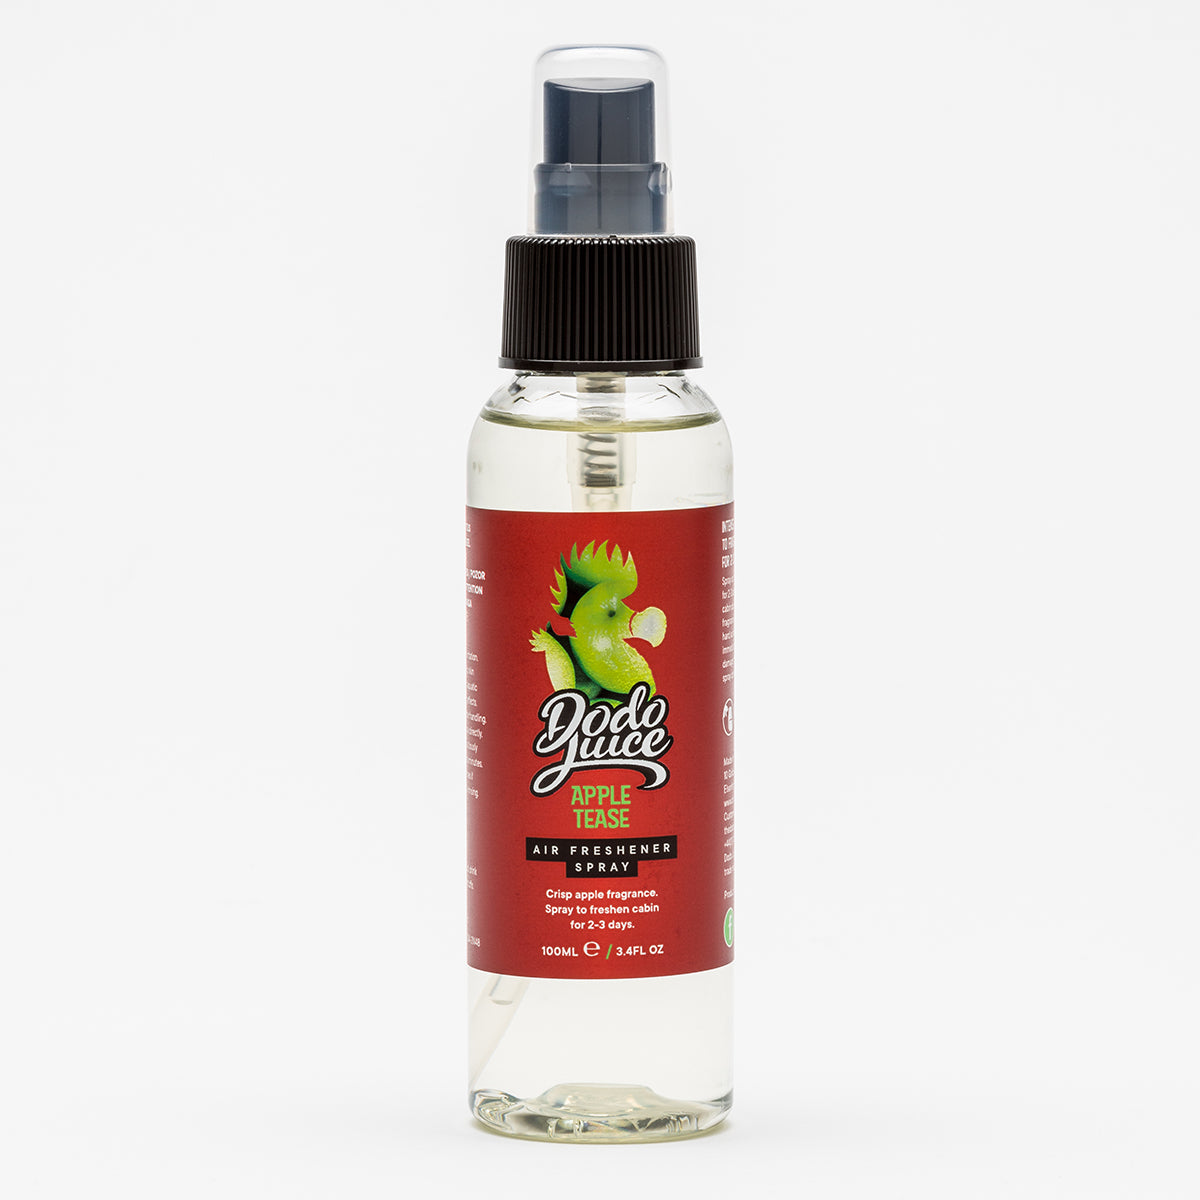 Apple Tease 100ml - apple fragrance air freshener spray  HS 9616101000